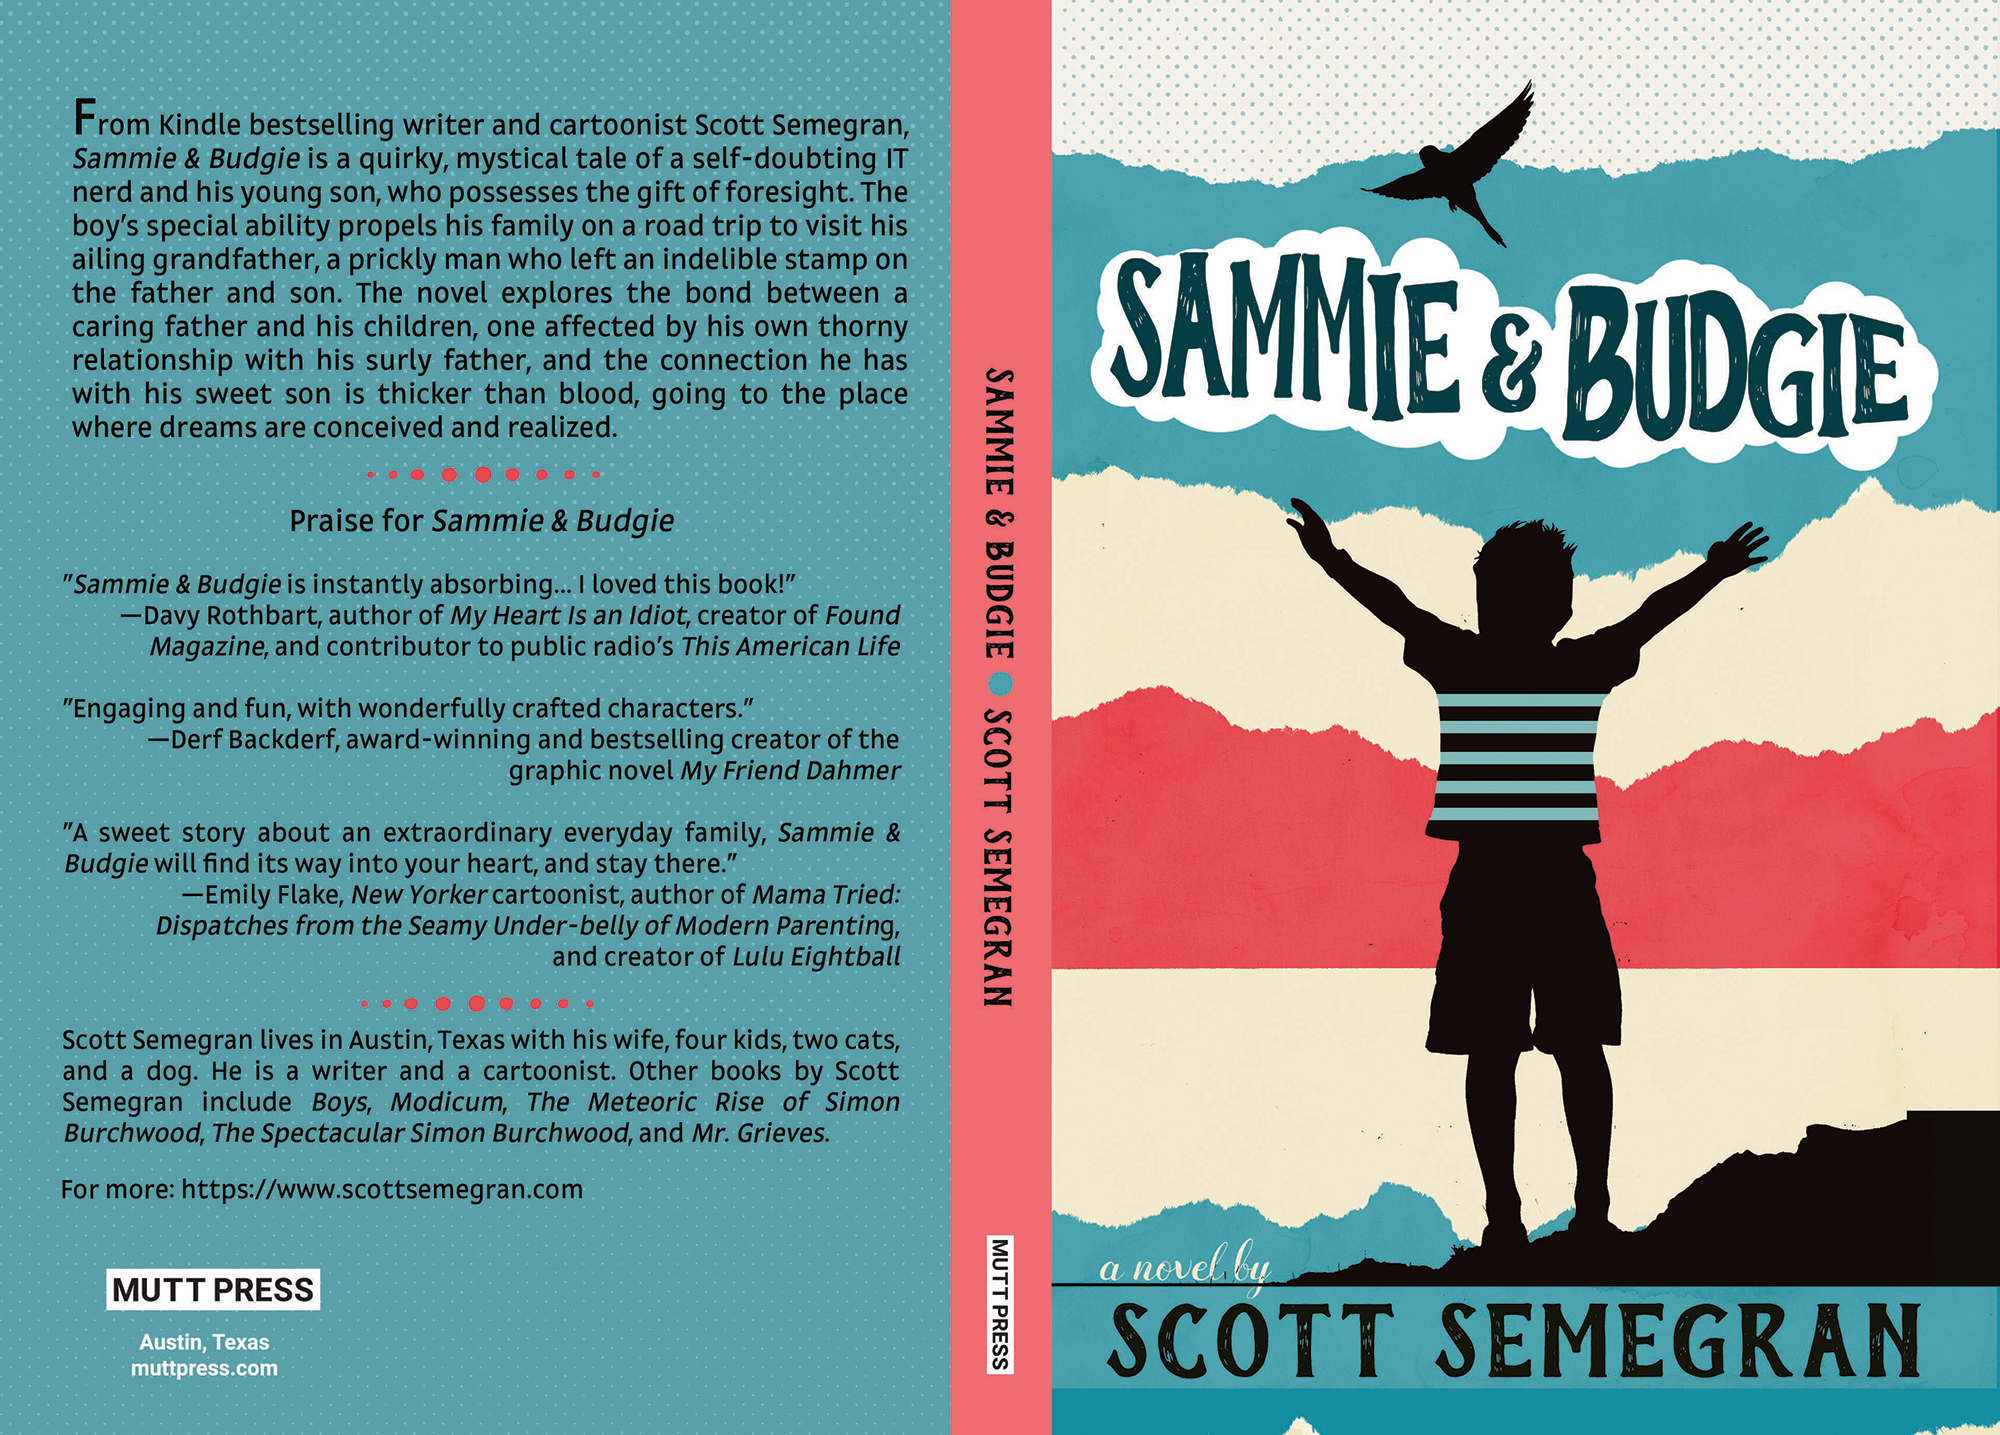 SammieBudgie full cover